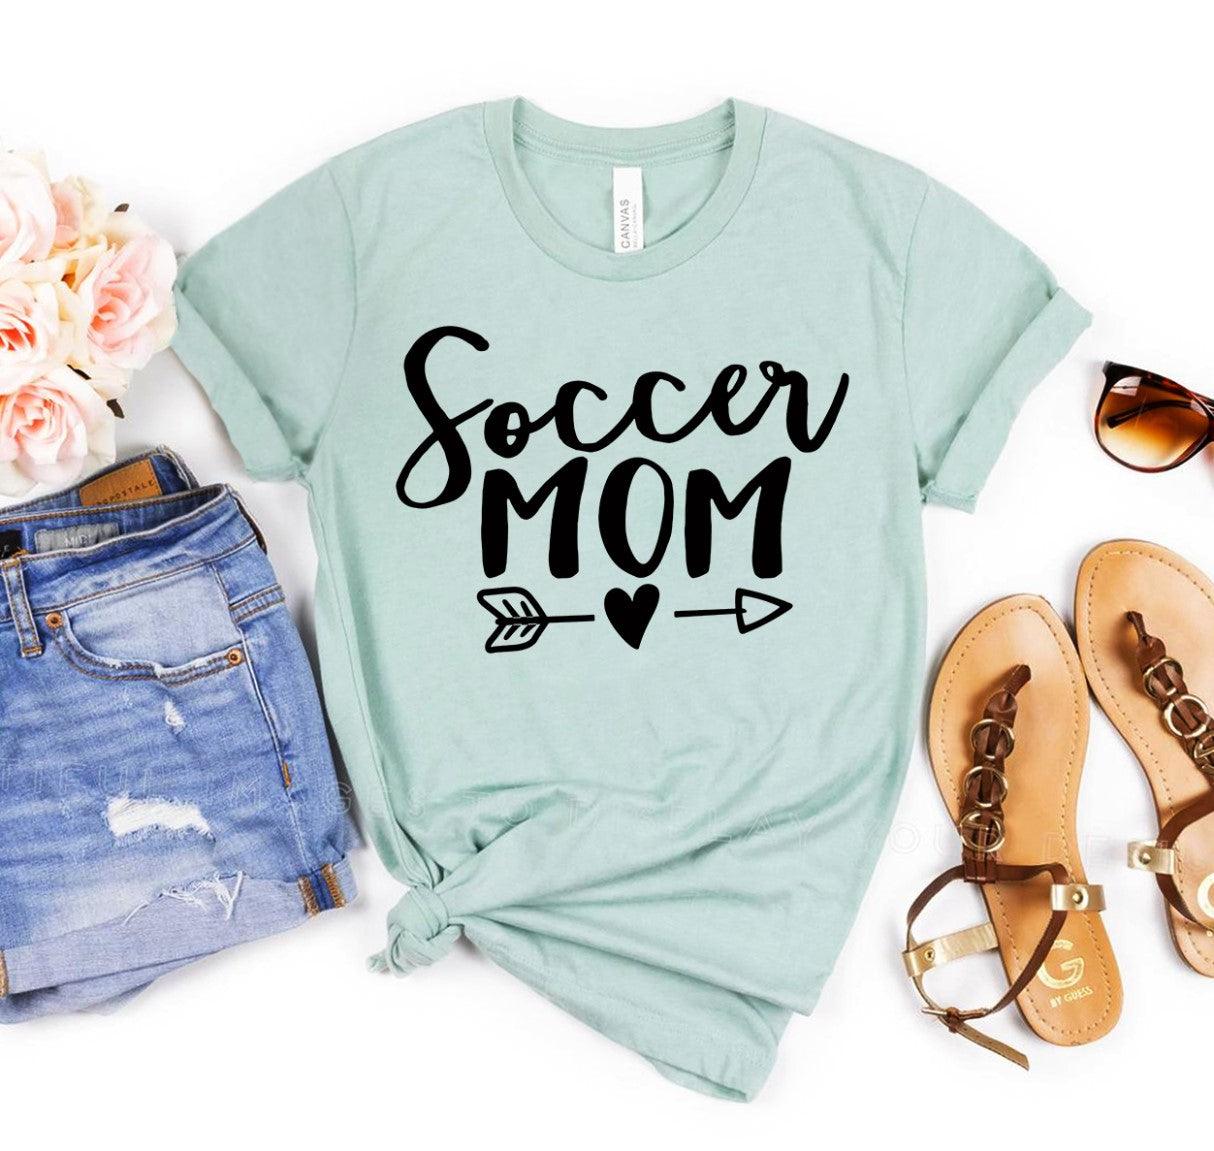 Soccer Mom Shirt - VirtuousWares:Global